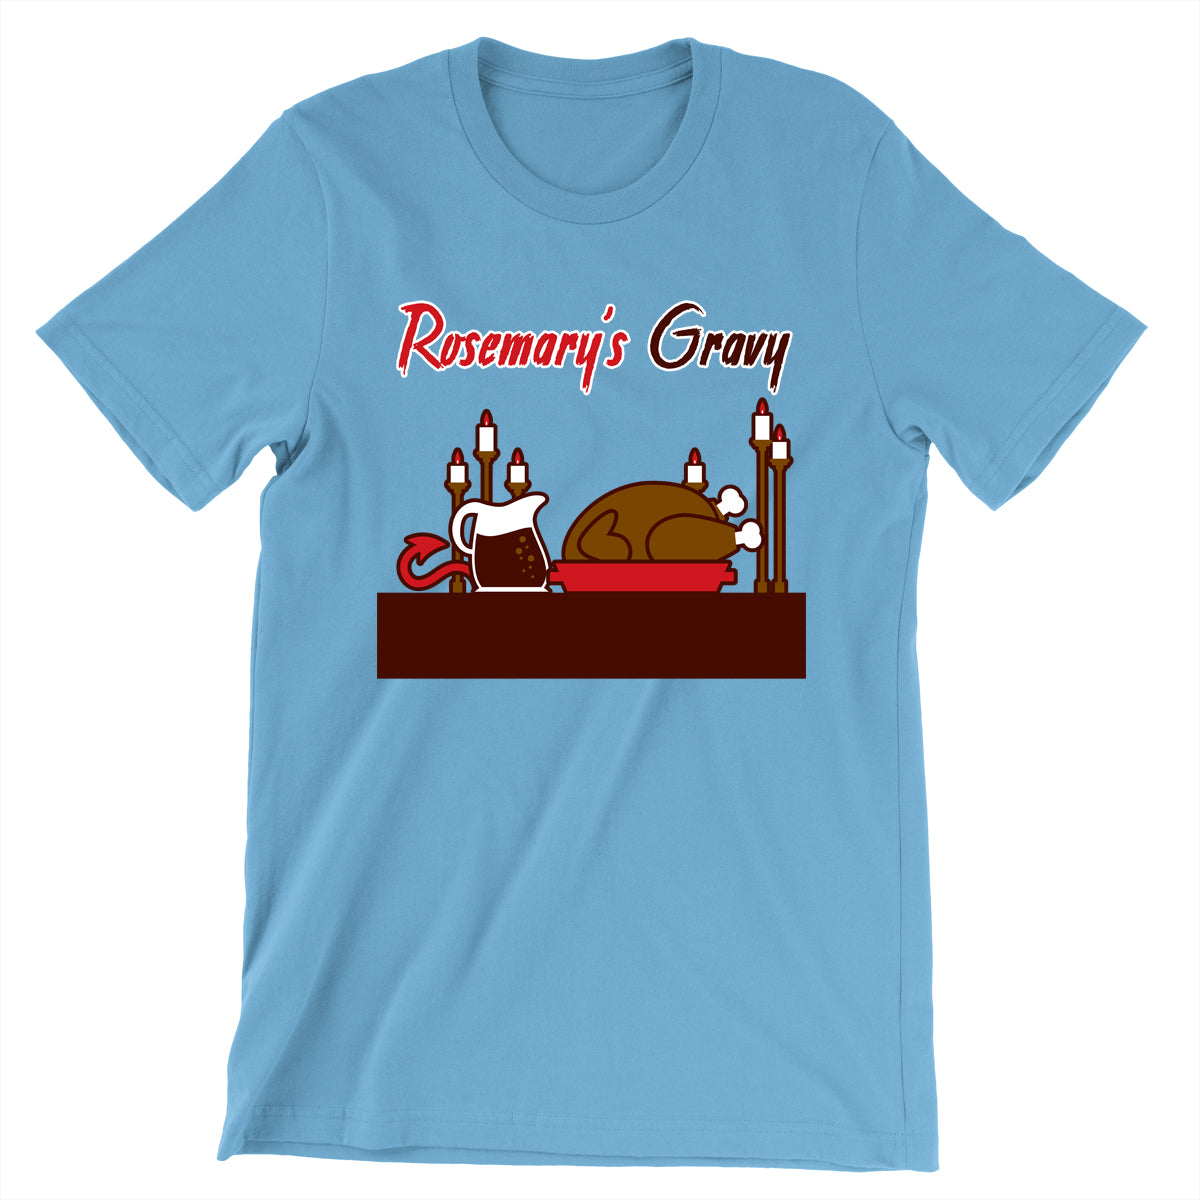 Movie The Food - Rosemary's Gravy T-Shirt - Ocean Blue